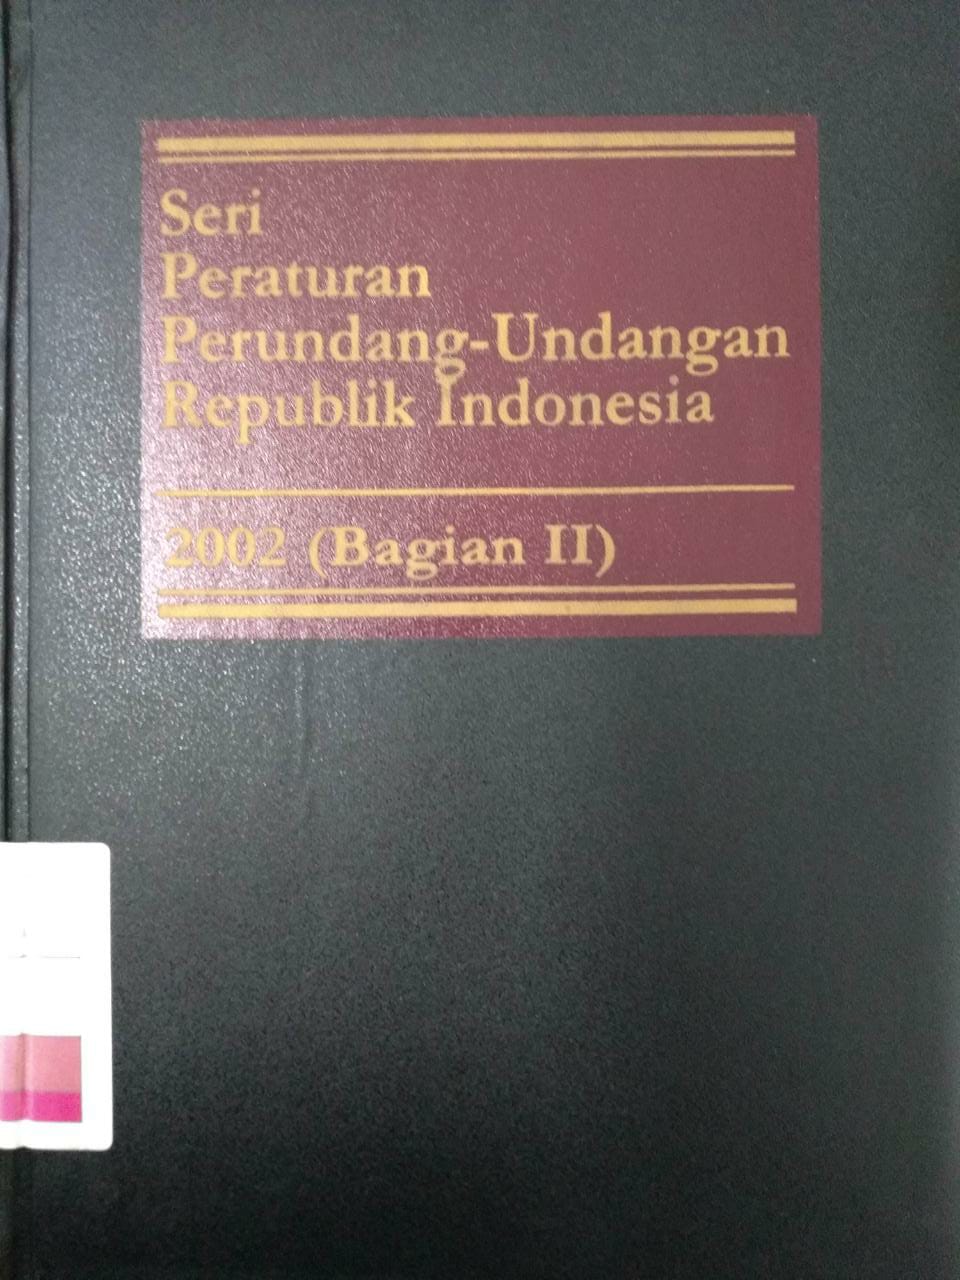 Seri Peraturan Perundang-undangan Republik Indonesia 2005 (Bagian IV). Jilid 2